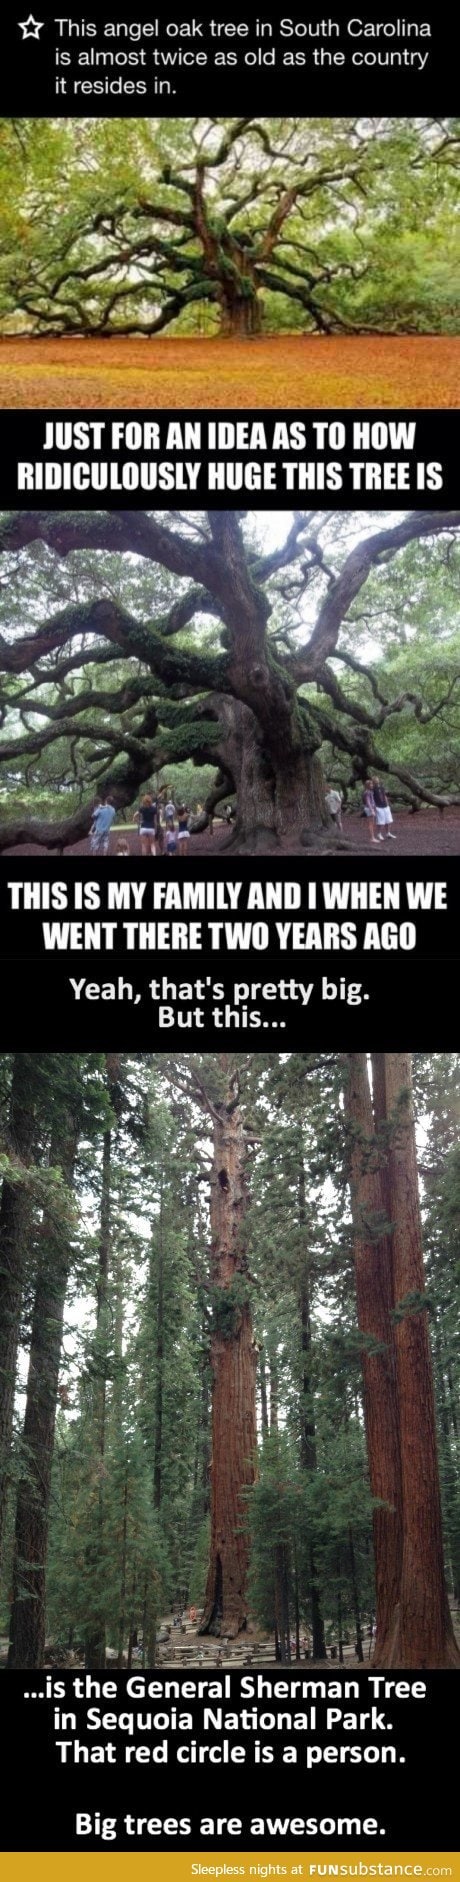 Big trees, man